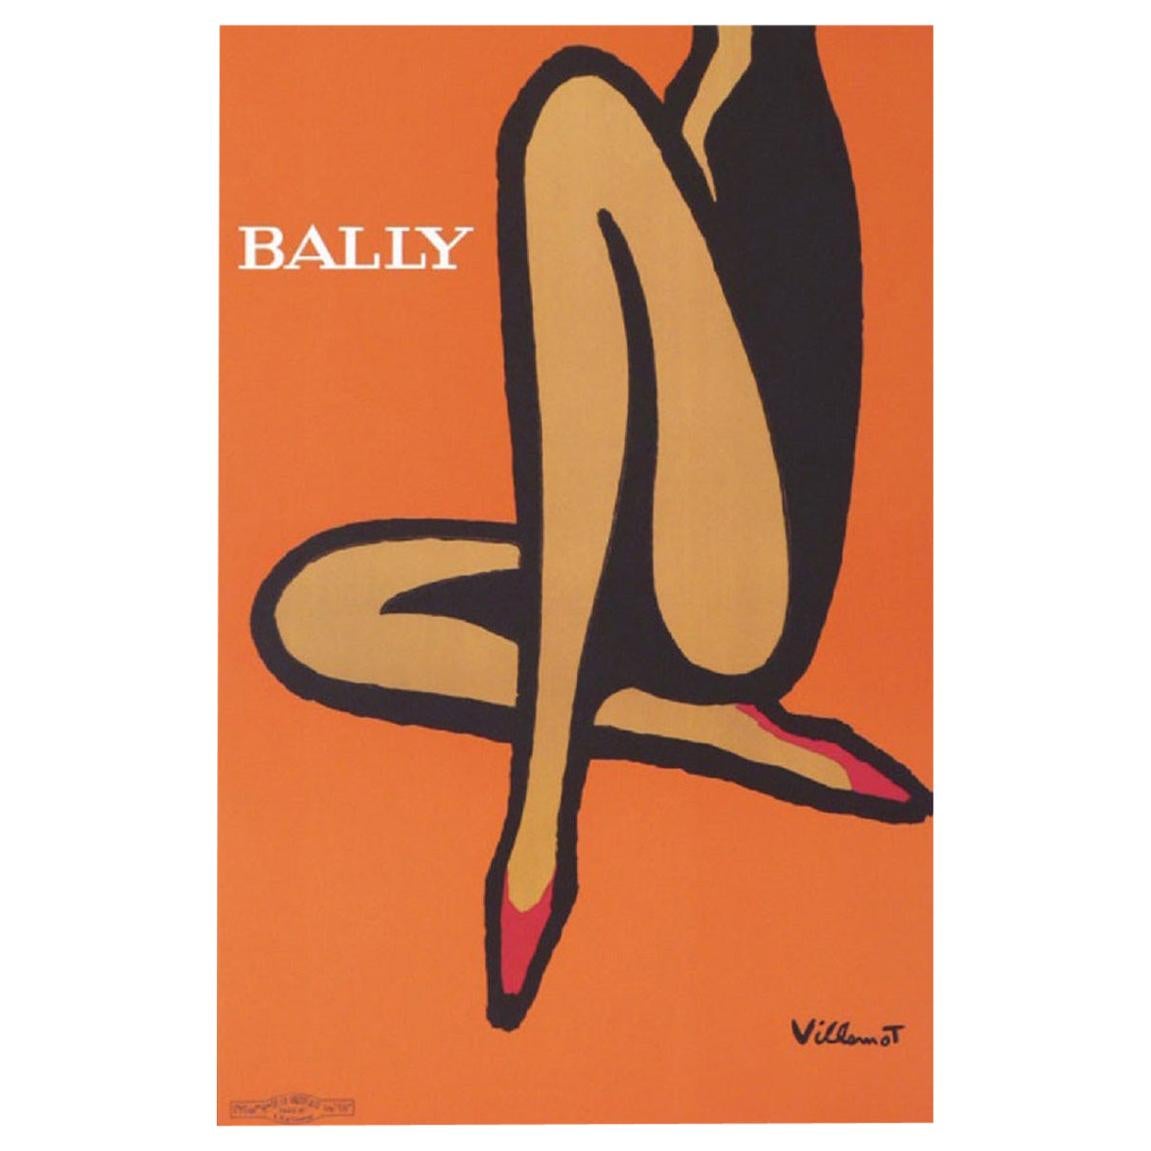 Bally Orange Small, Villemot 1967 Original Vintage Poster